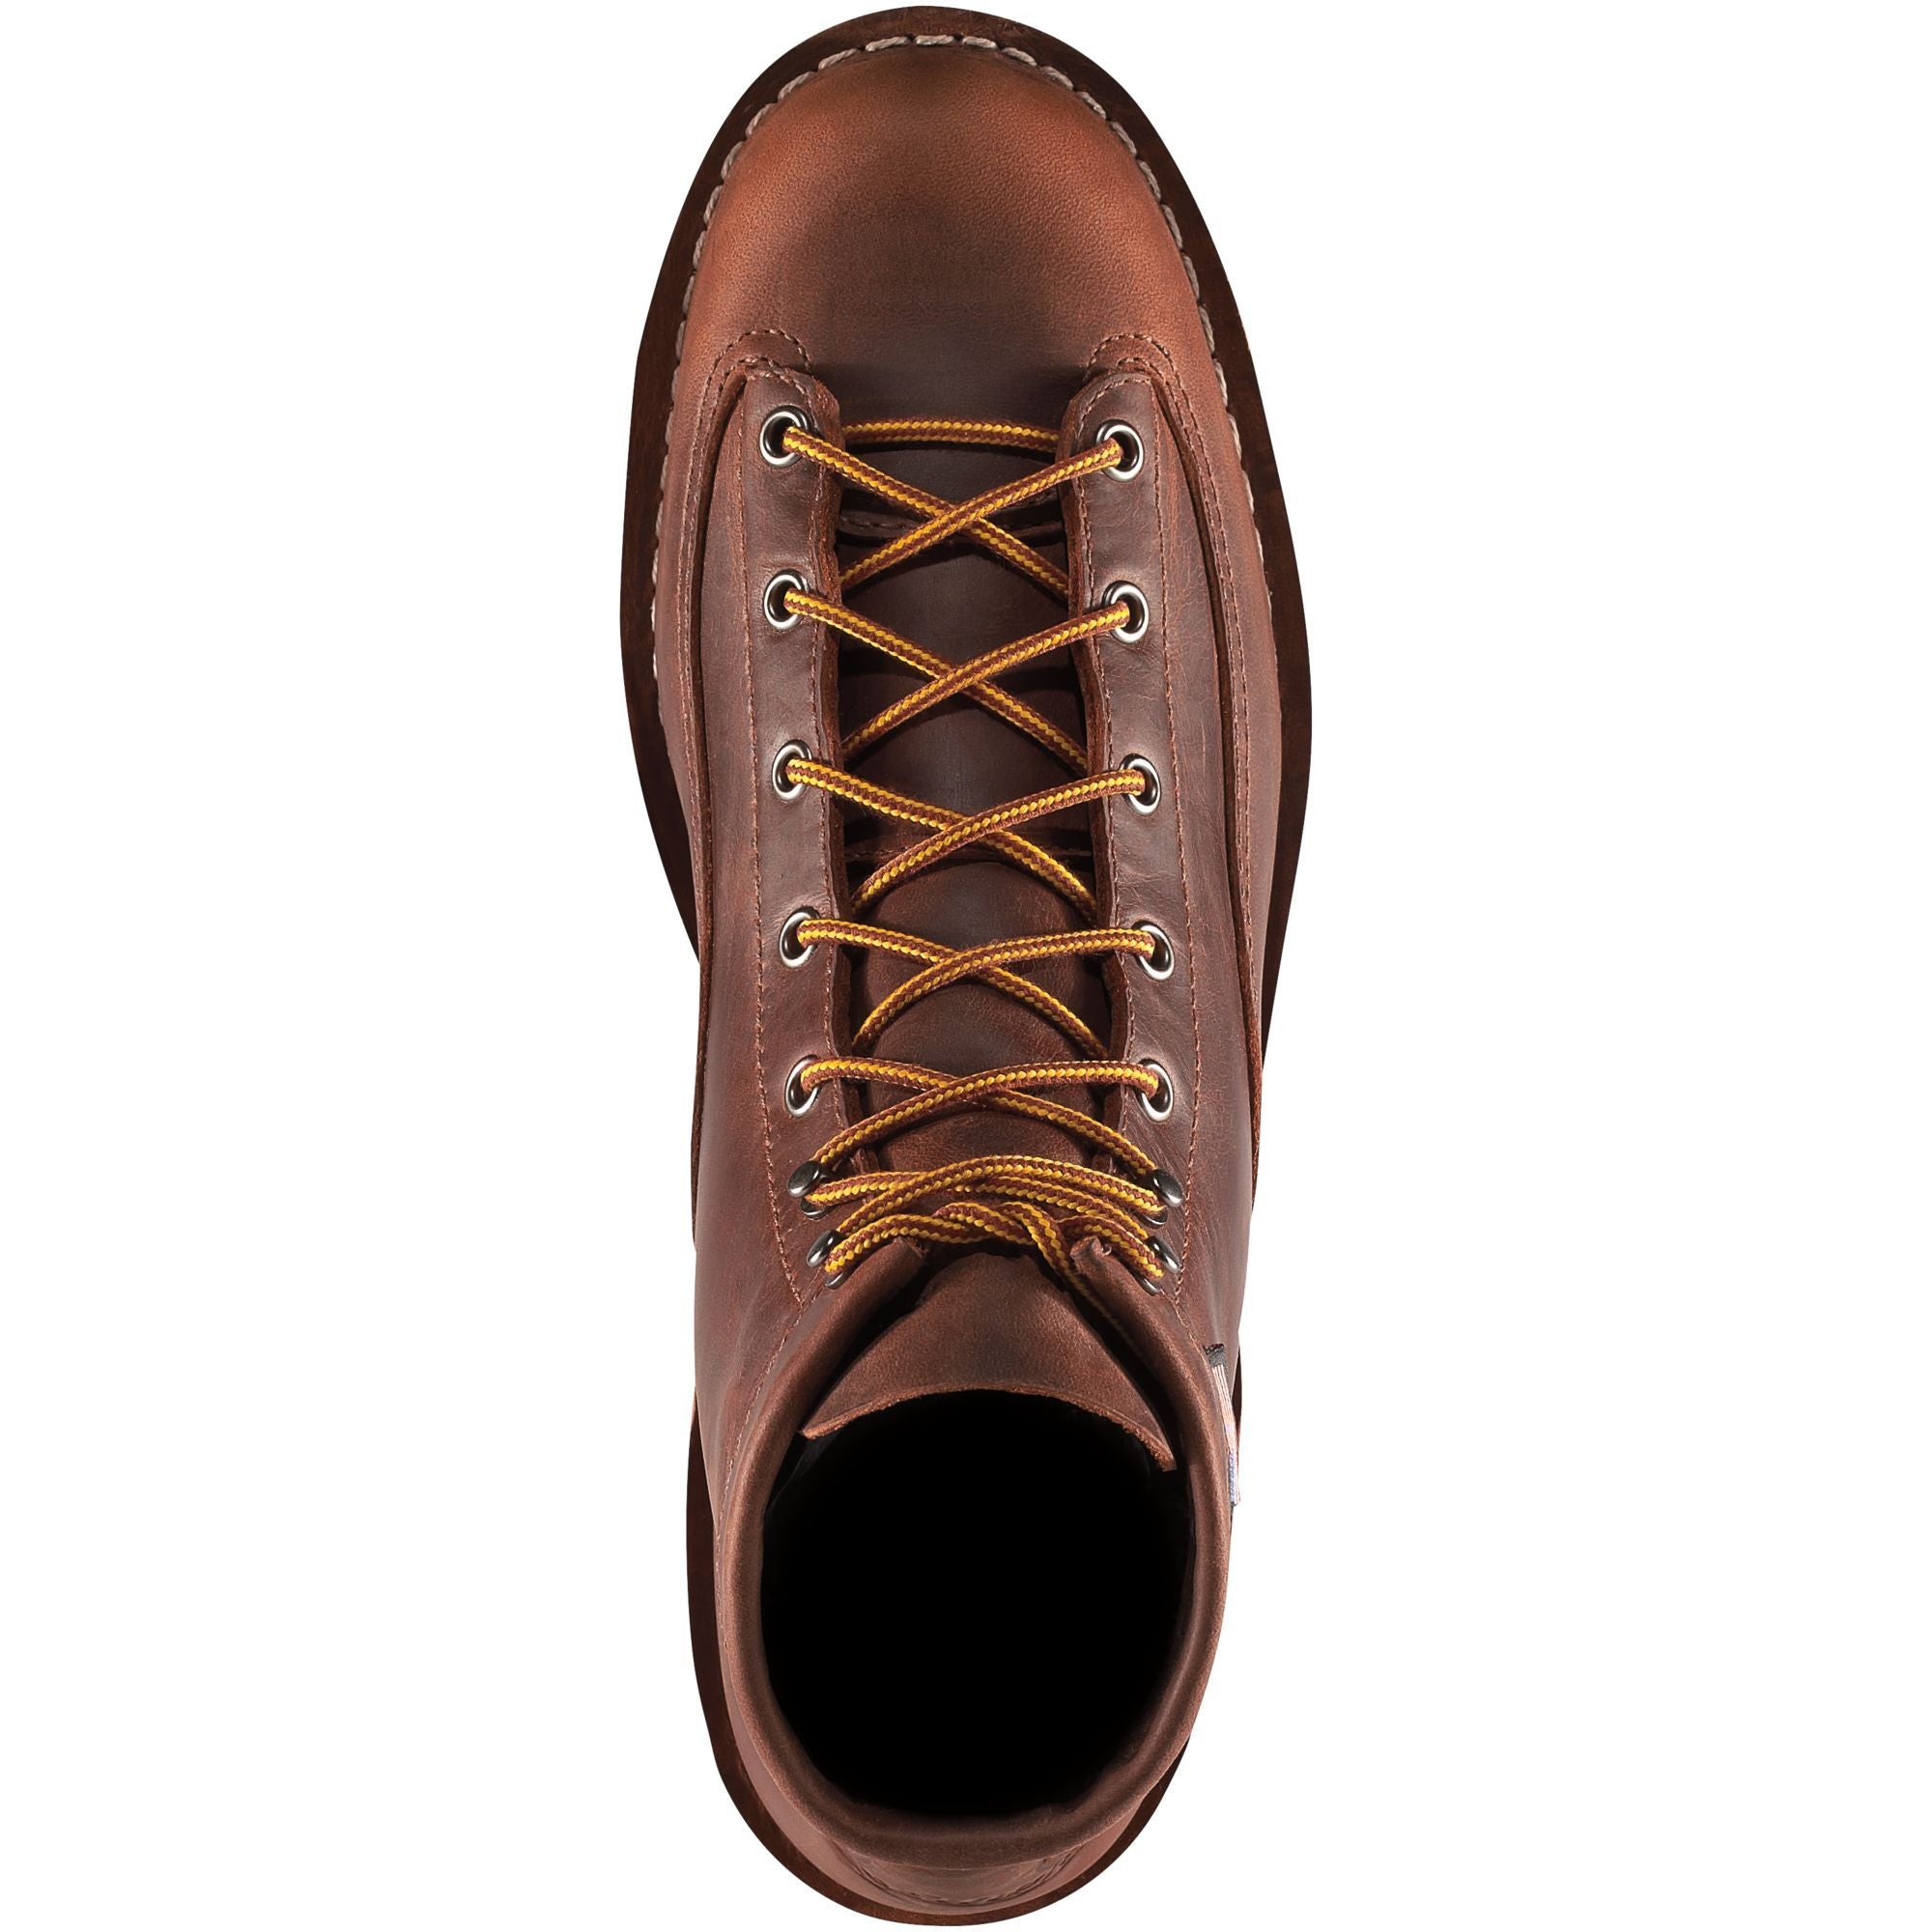 Danner Men's Bull Run USA Made 6" Soft Toe Wedge Work Boot - Brown - 15552  - Overlook Boots